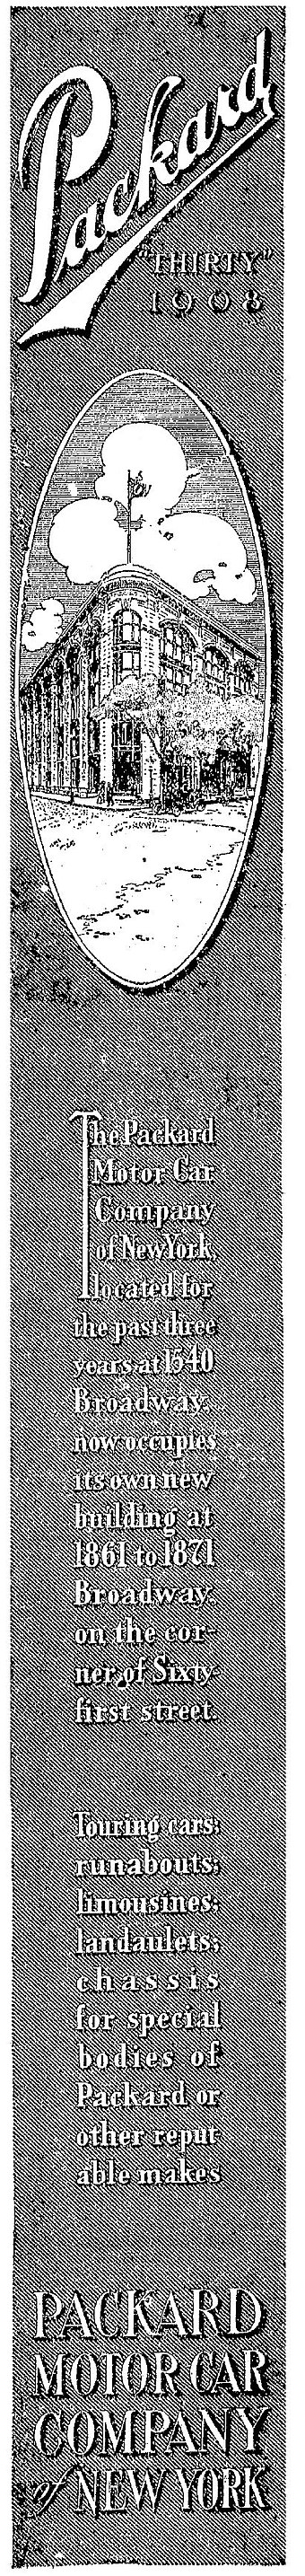 1907 Packard, The New York Times, November 6, 1907